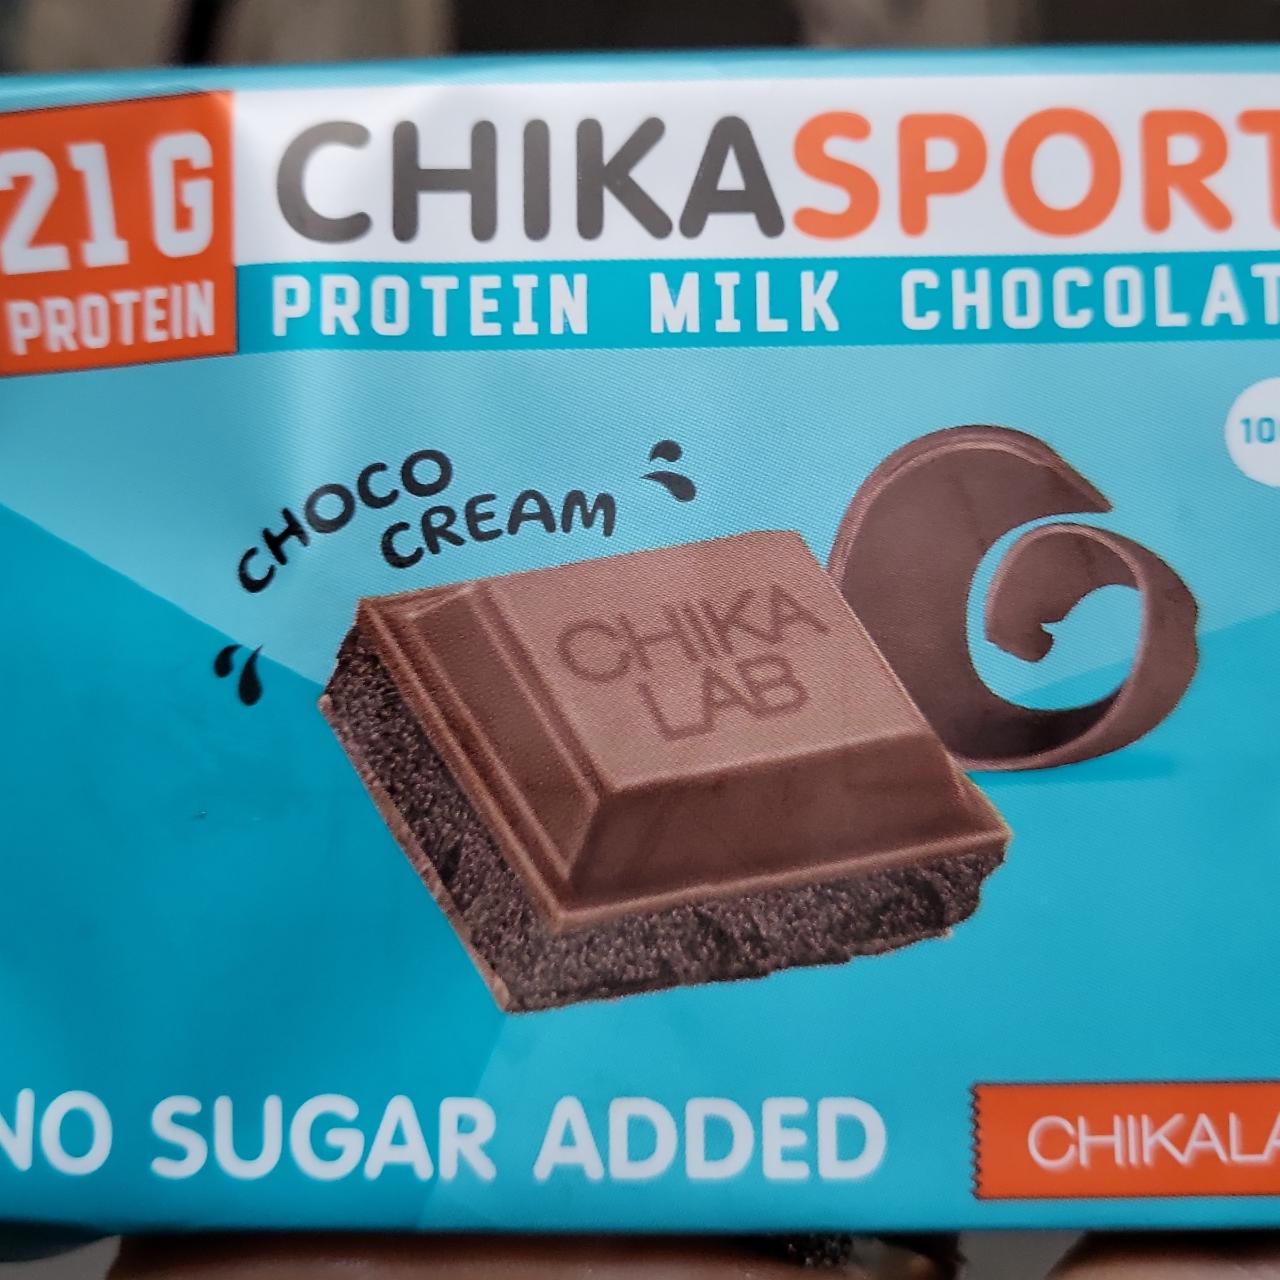 Fotografie - Chikasport 21g Protein milk chocolate Choco cream No added sugar Chikalab